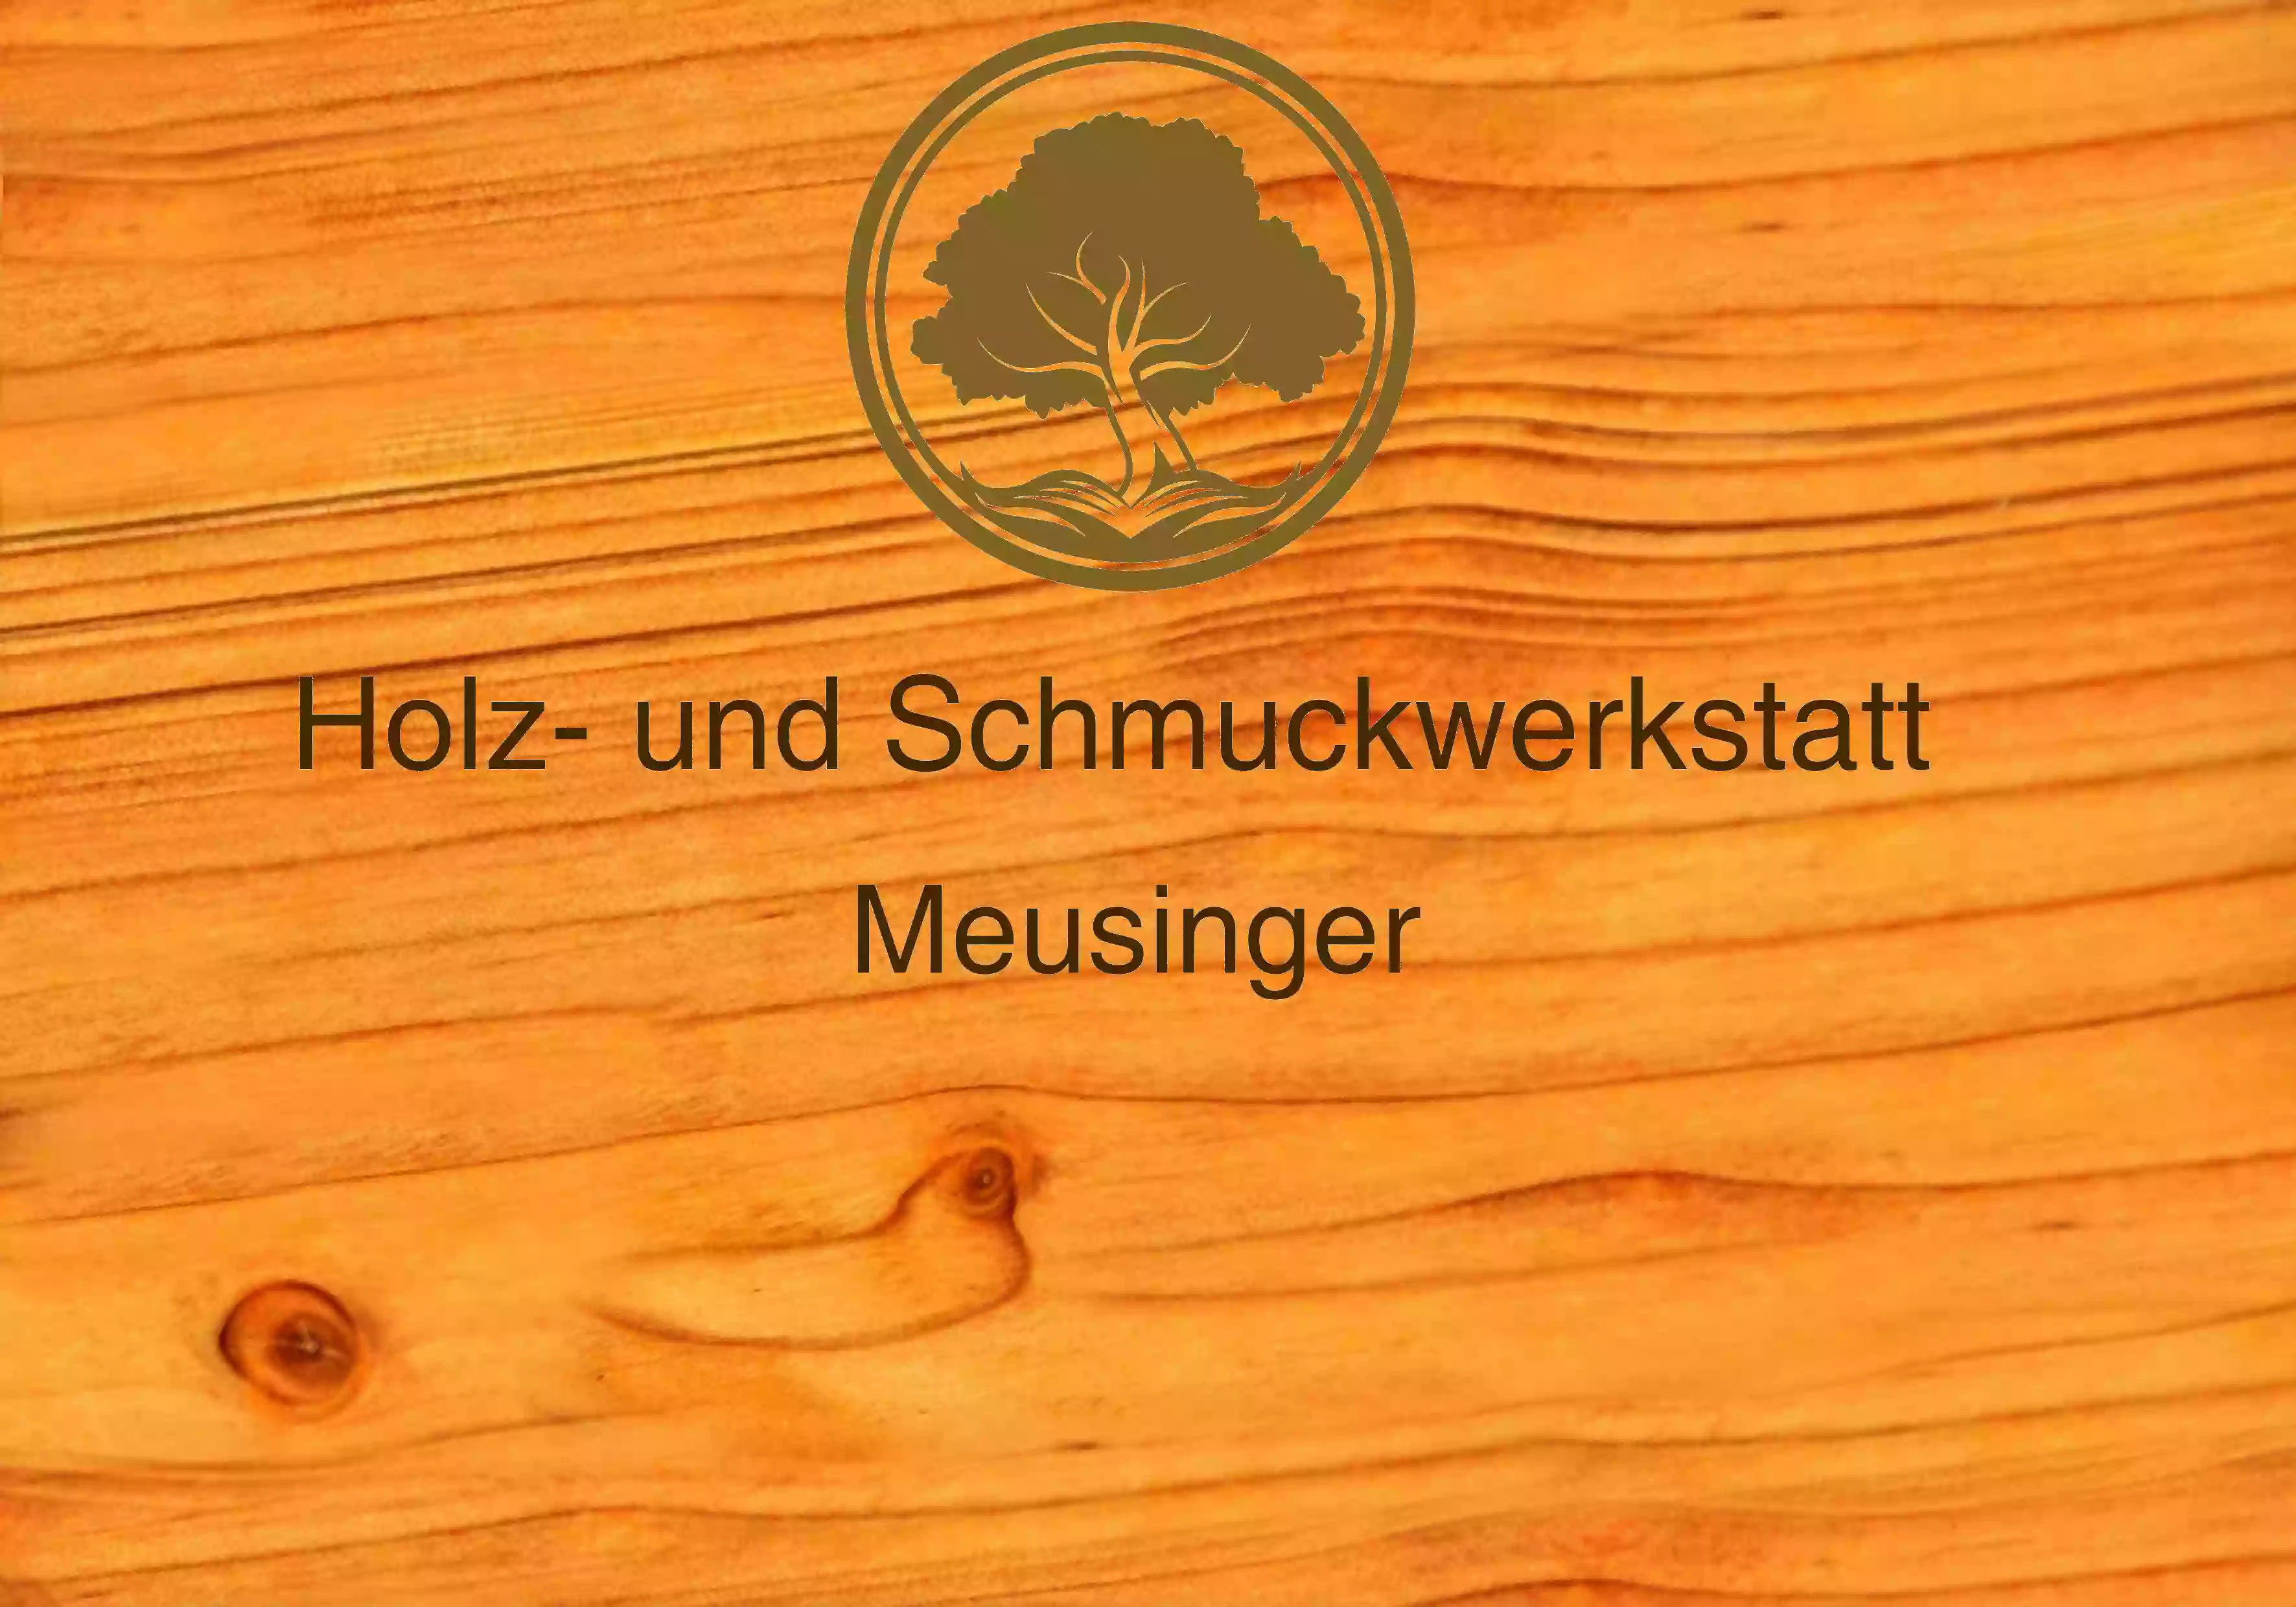 Holz- und Schmuckwerkstatt Meusinger